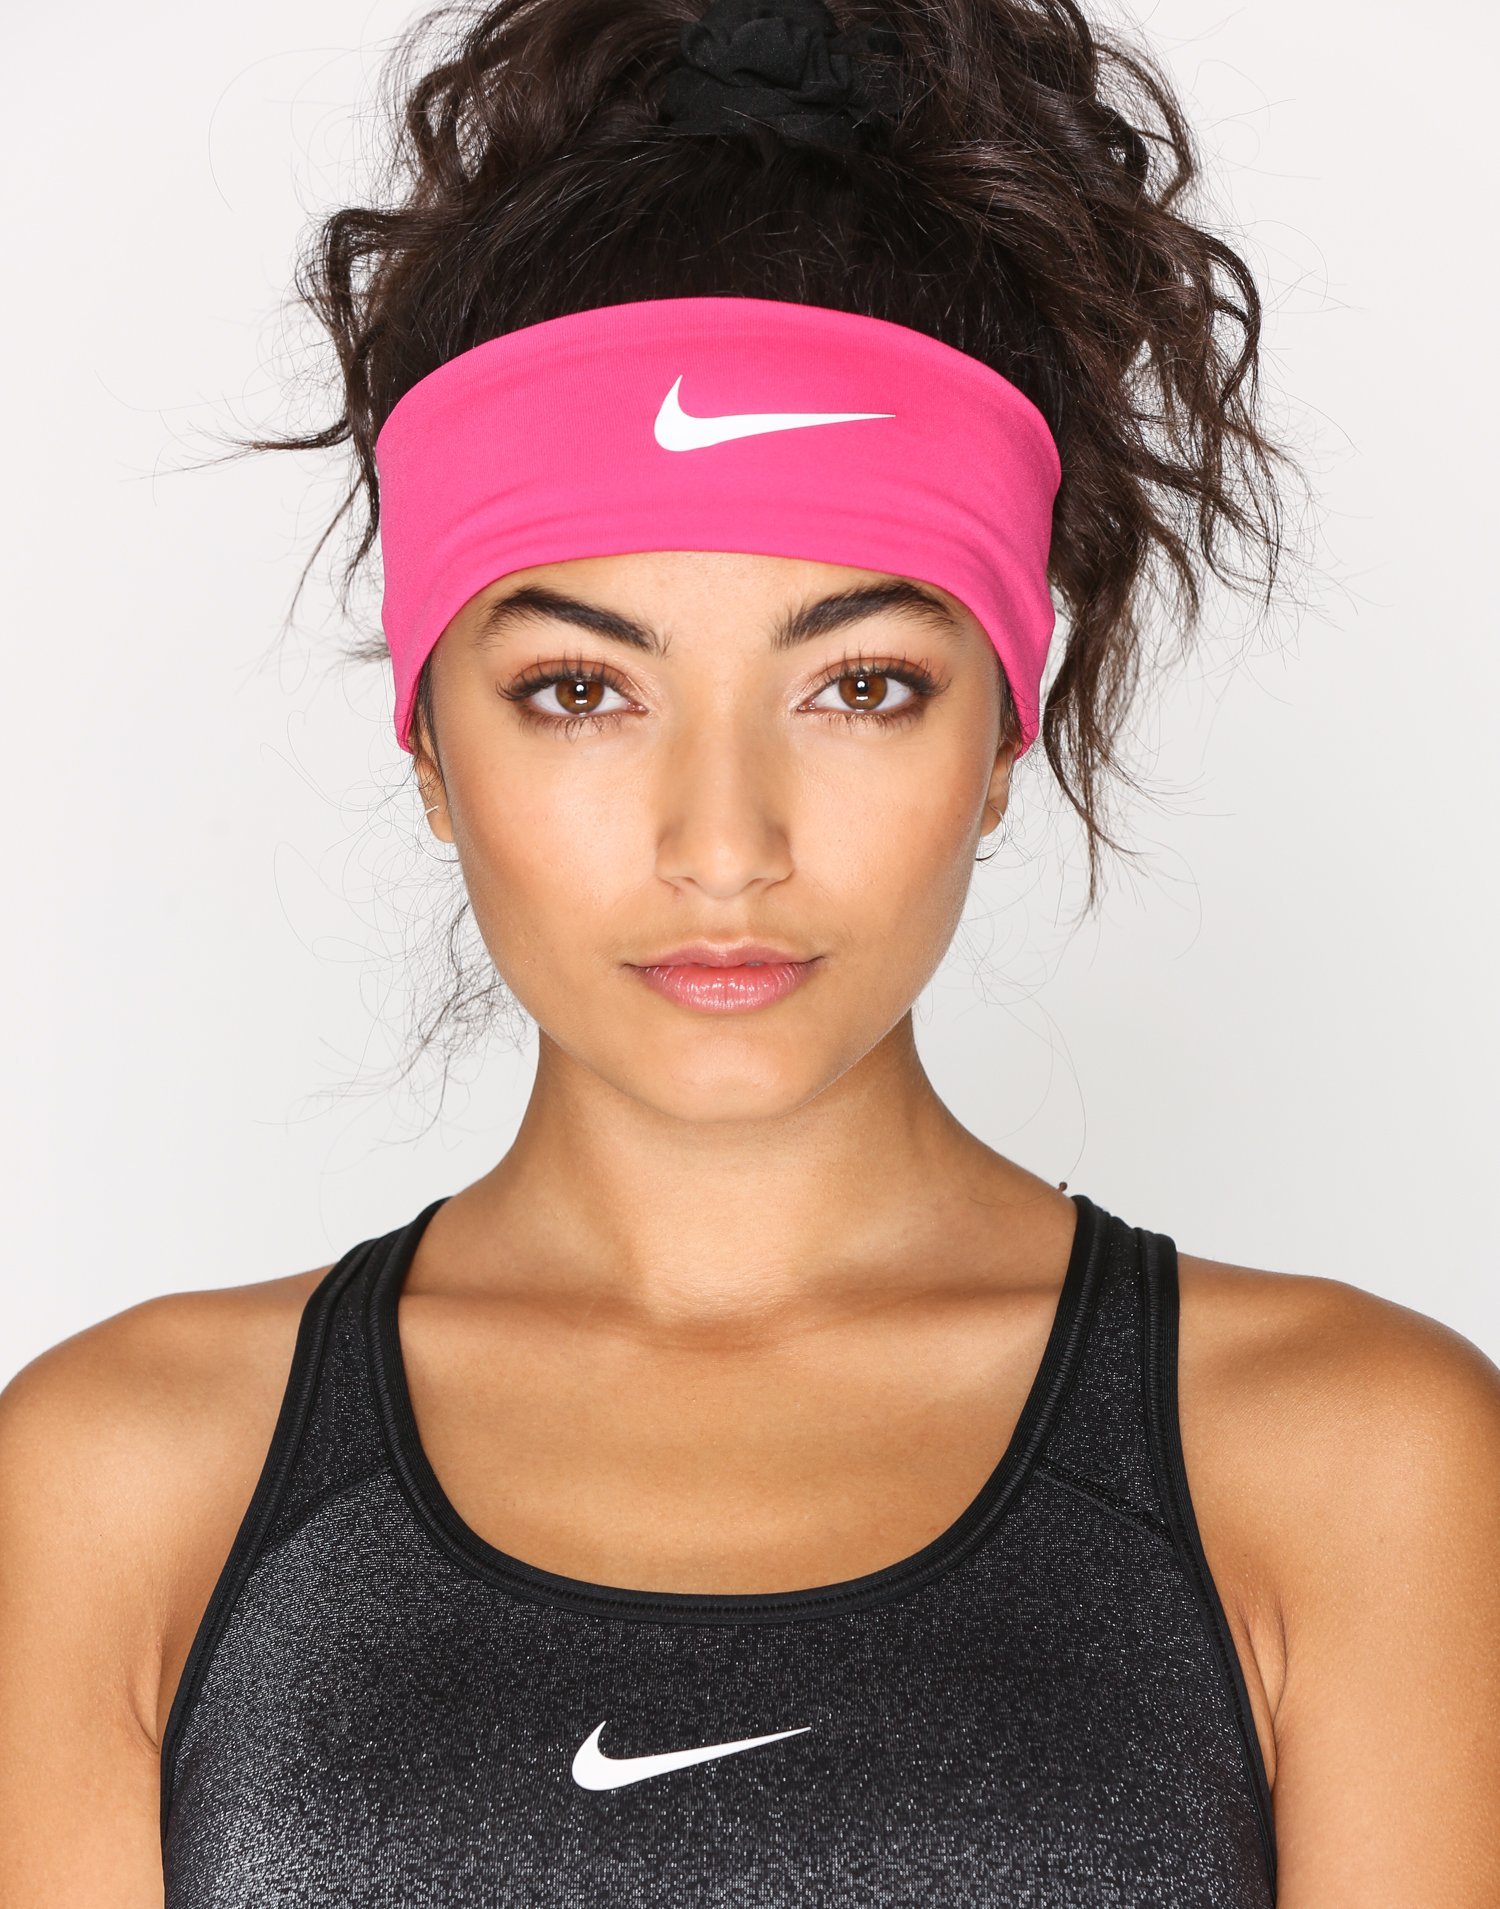 Nike Fury Headband 20 Nike Pinkwhite Accessories Sport 4258